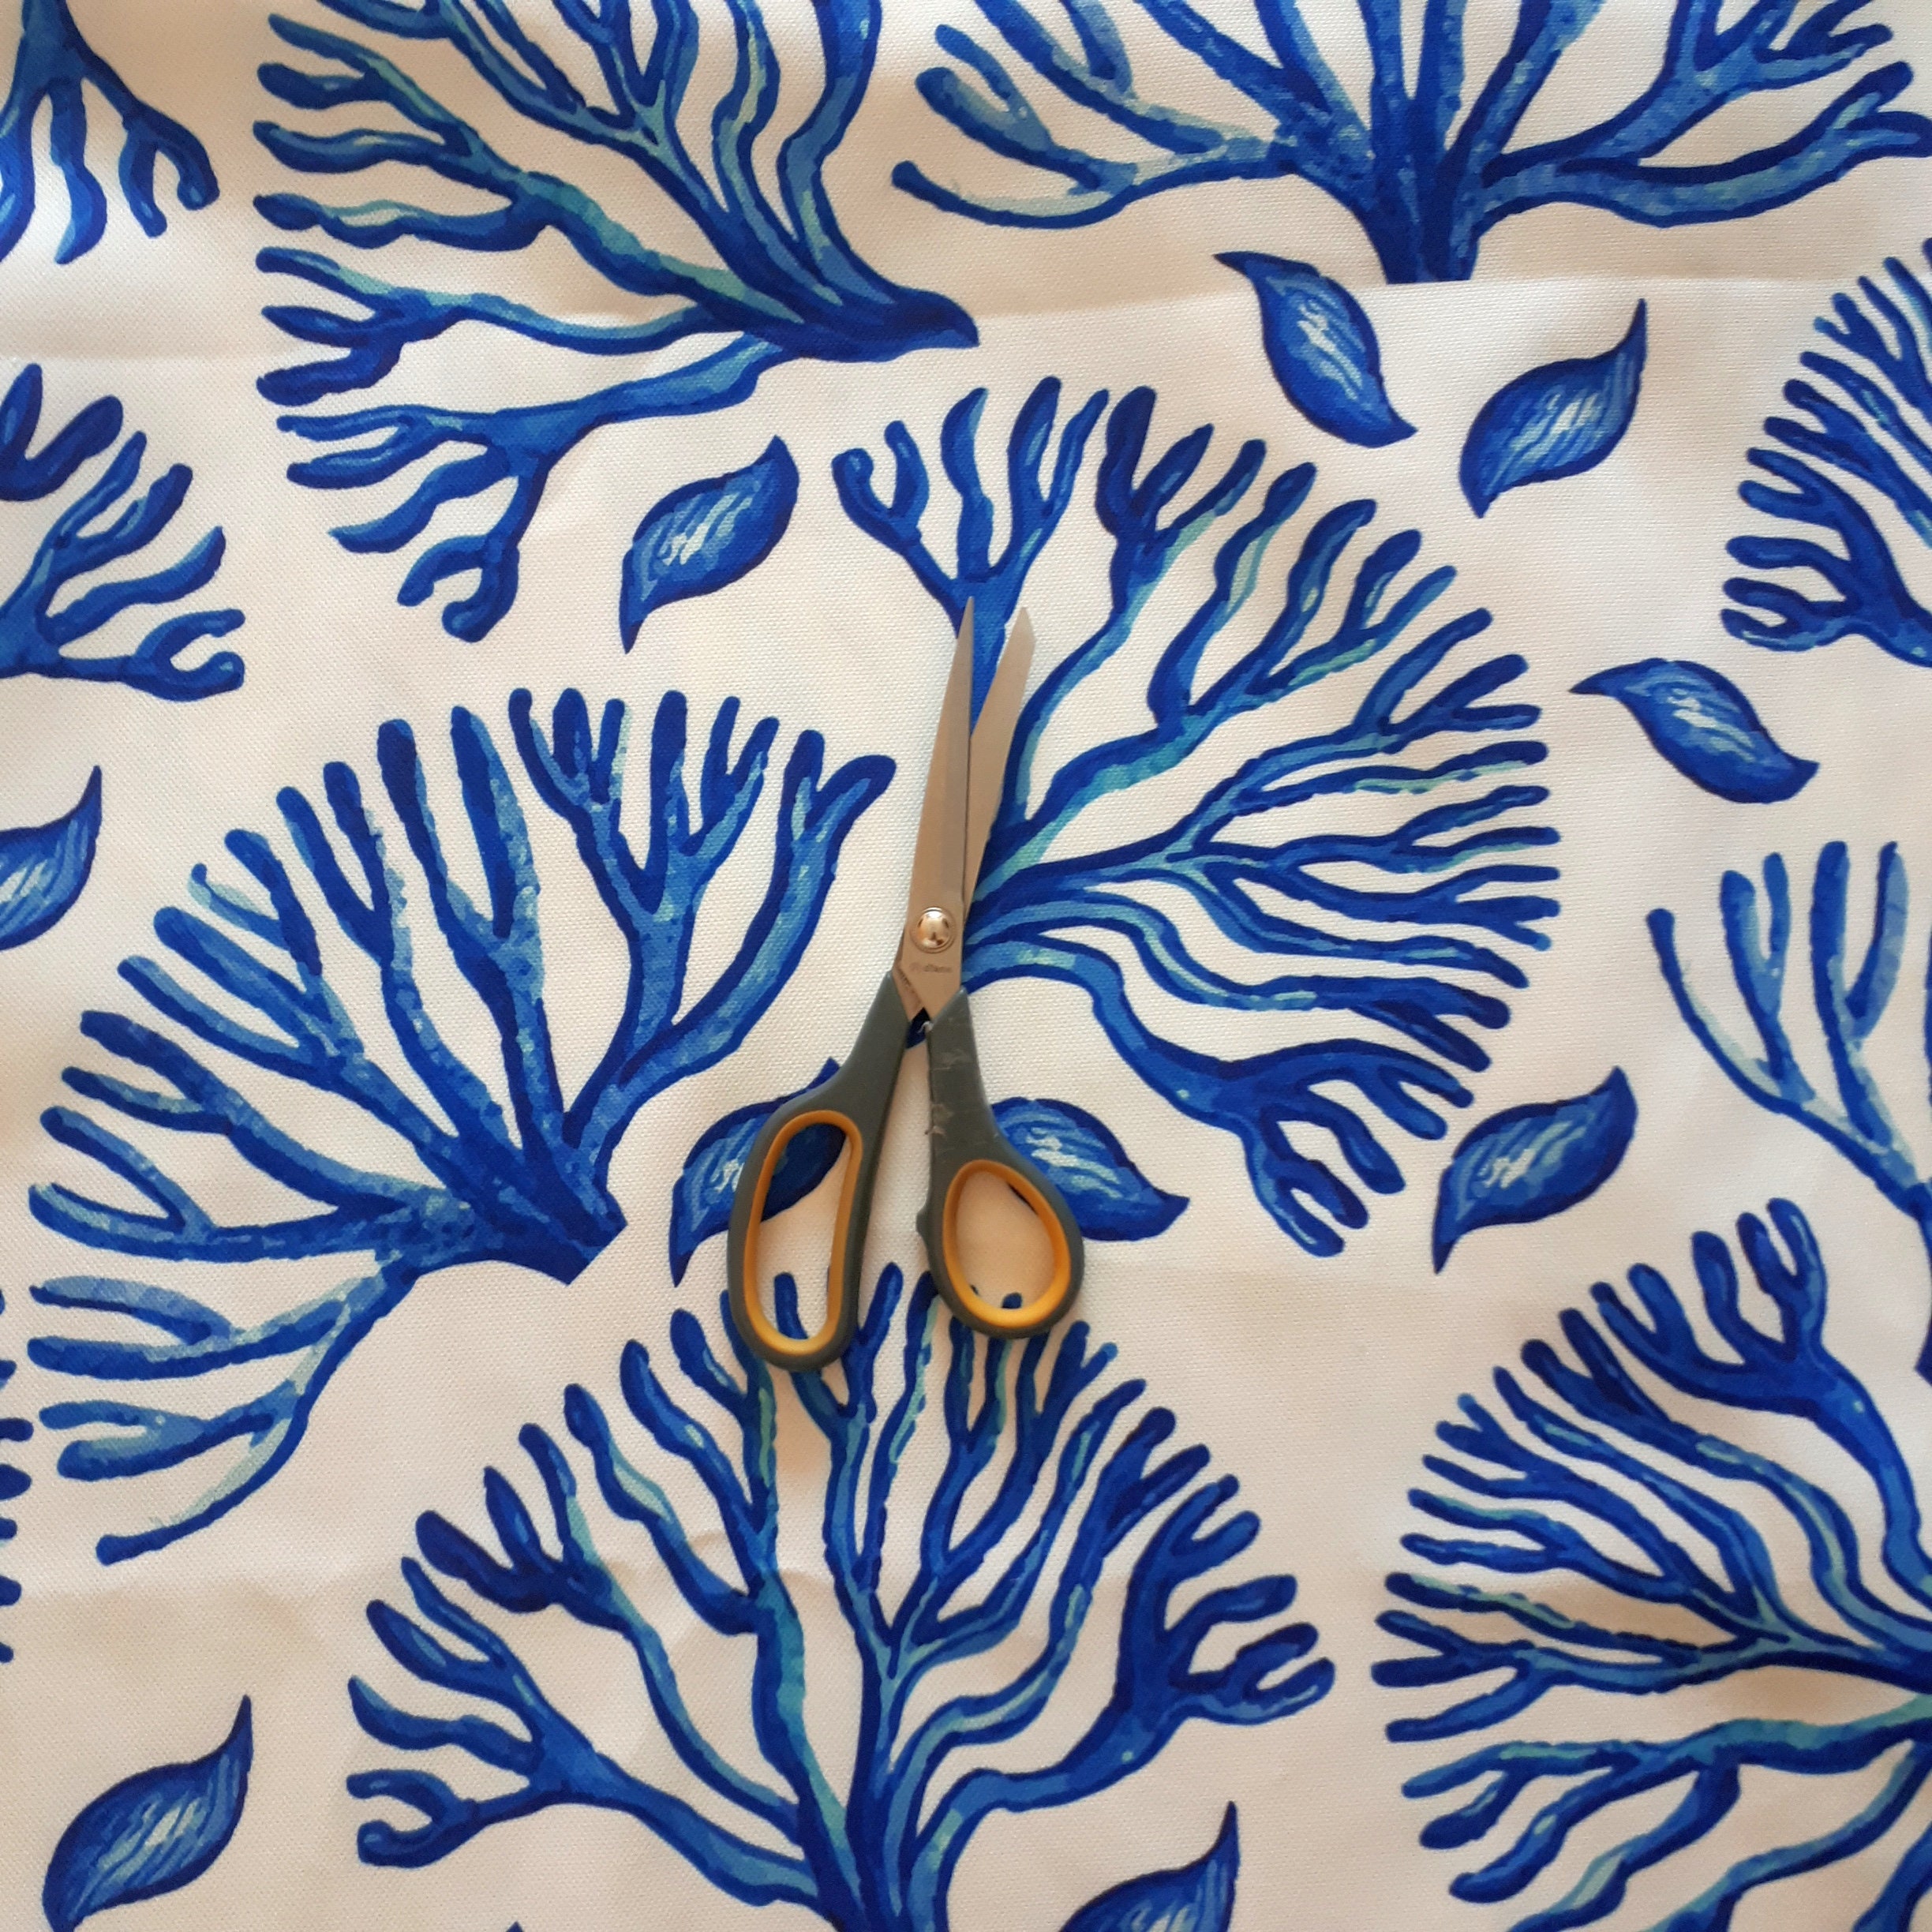 Blue Coral print fabric ocean sea marina theme fabric yacht | Etsy